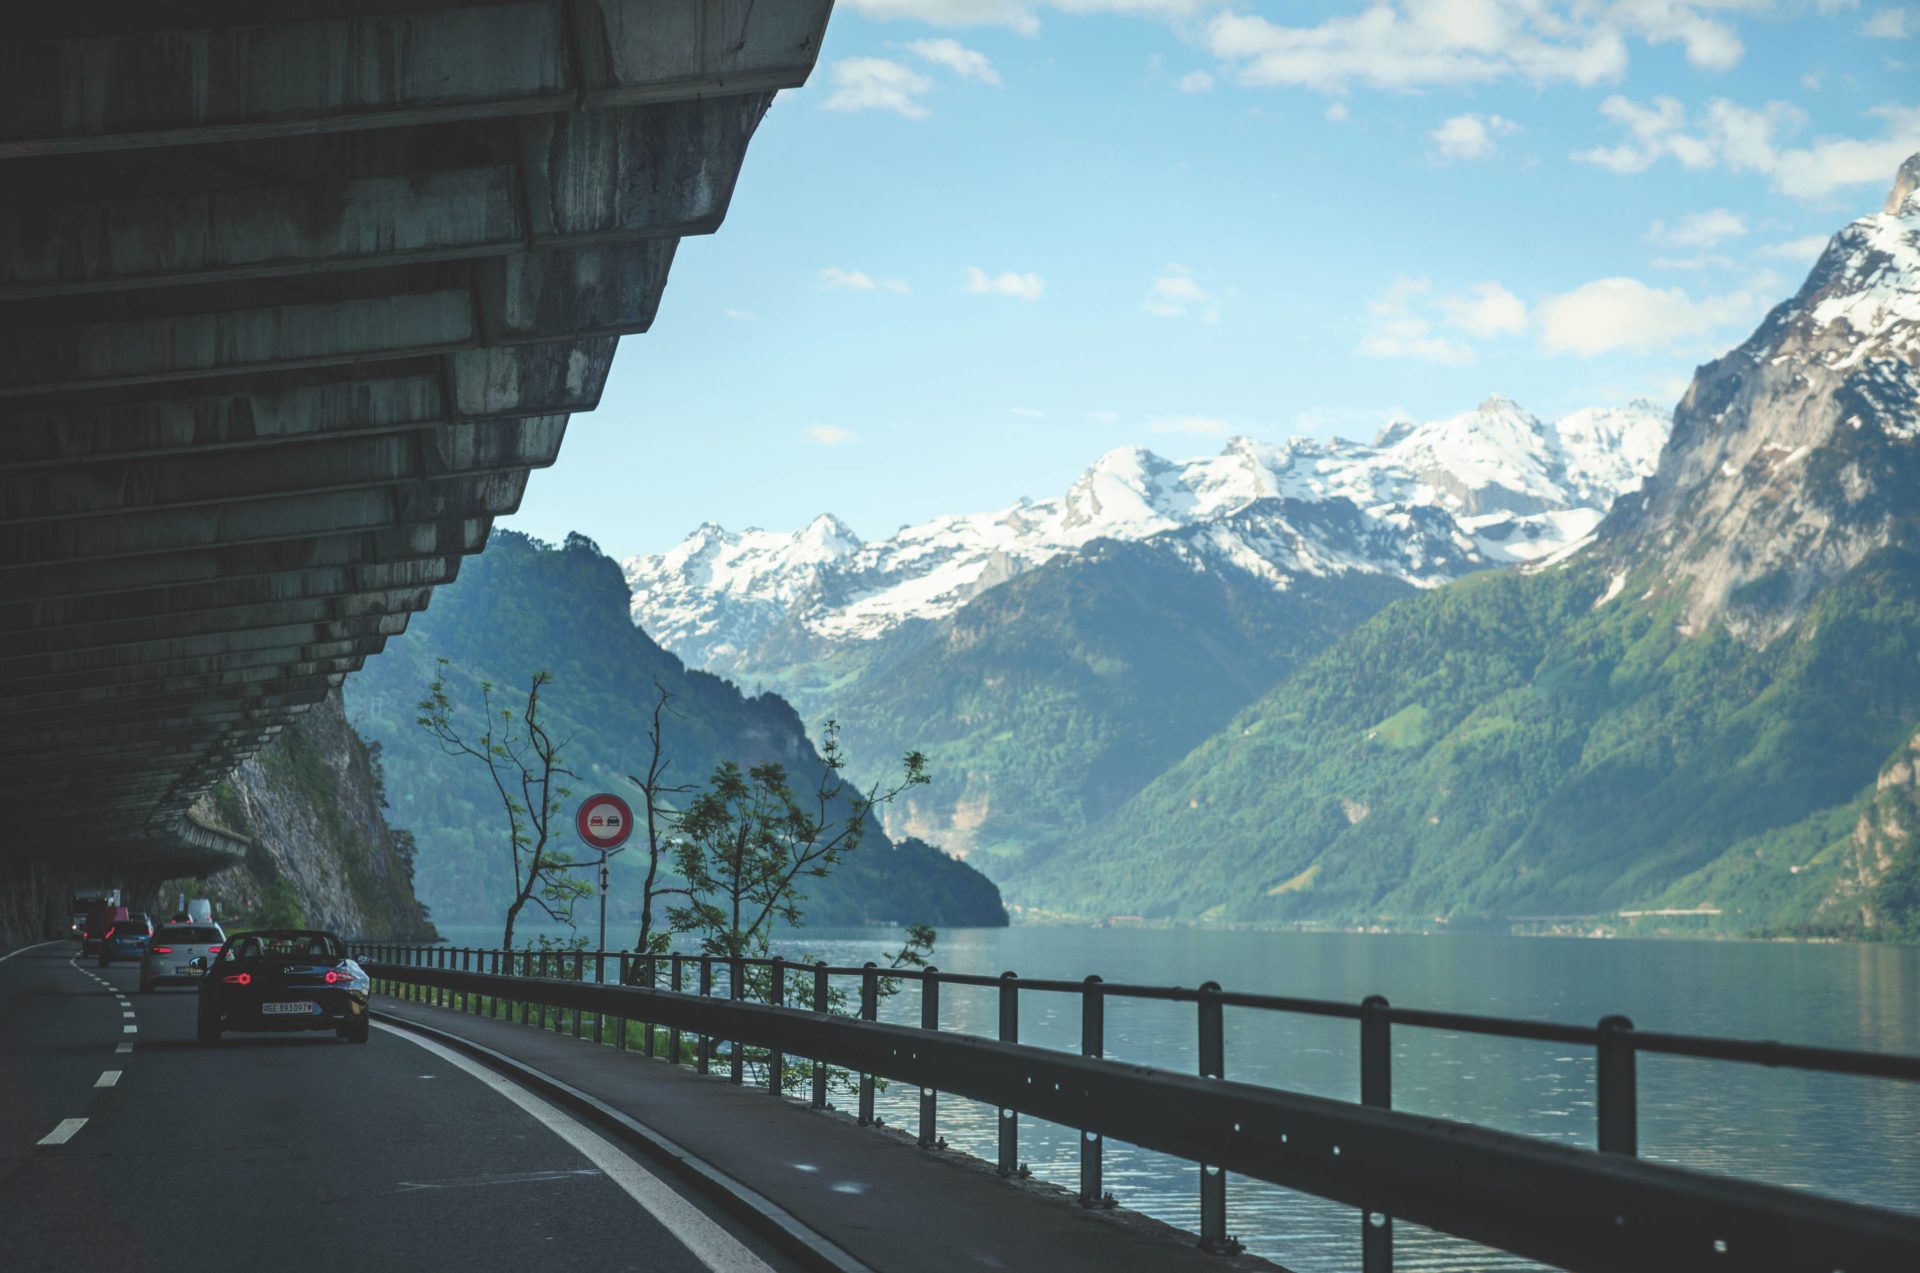 Axenstrasse highway in Switzerland